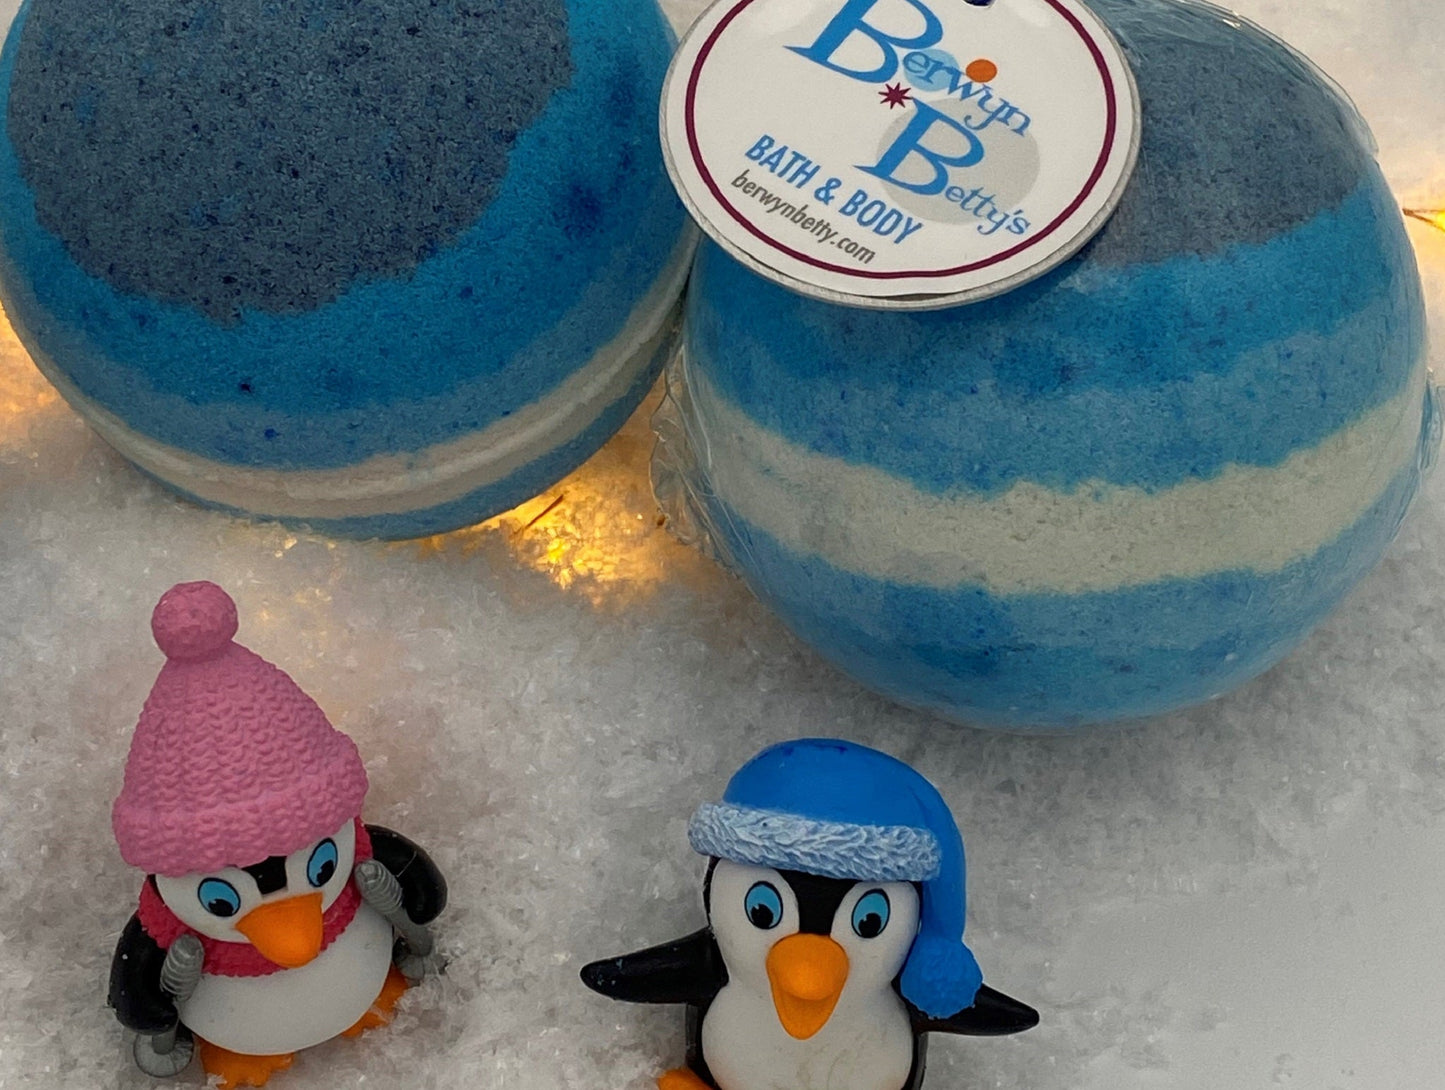 Penguin Bath Bomb with Toy Inside - Berwyn Betty's Bath & Body Shop